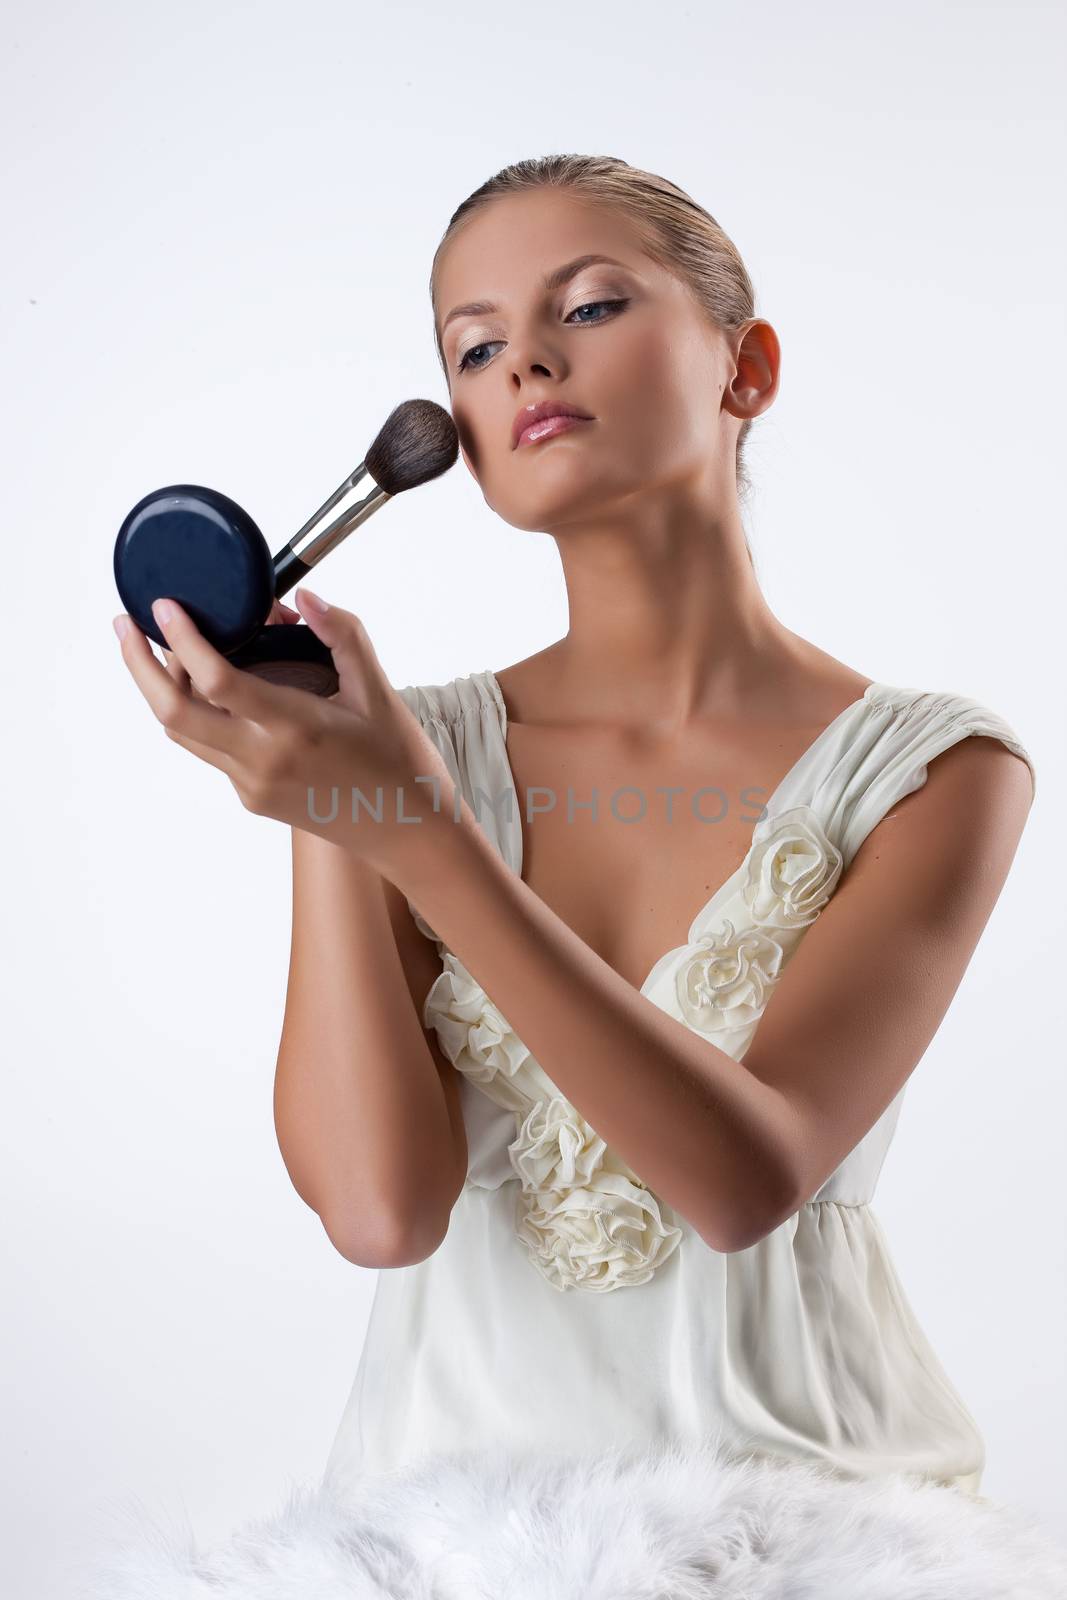 Young Woman Applying Cosmetics by Fotoskat